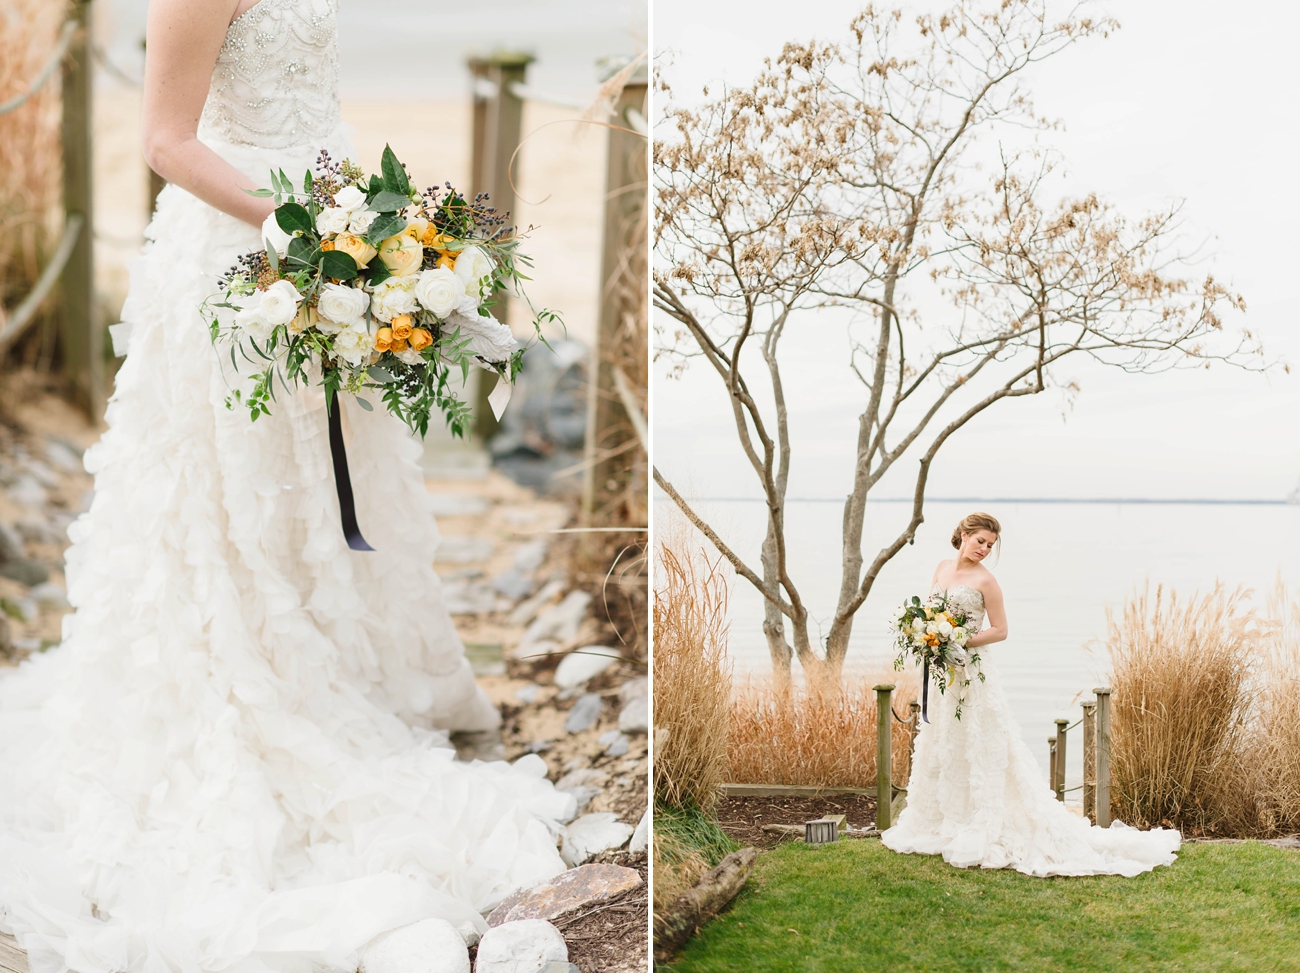 Romantic Coastal Beach Wedding Inspiration | Ruffled Gown, Cascading Bouquet, and the Chesapeake Bay Beach Club!